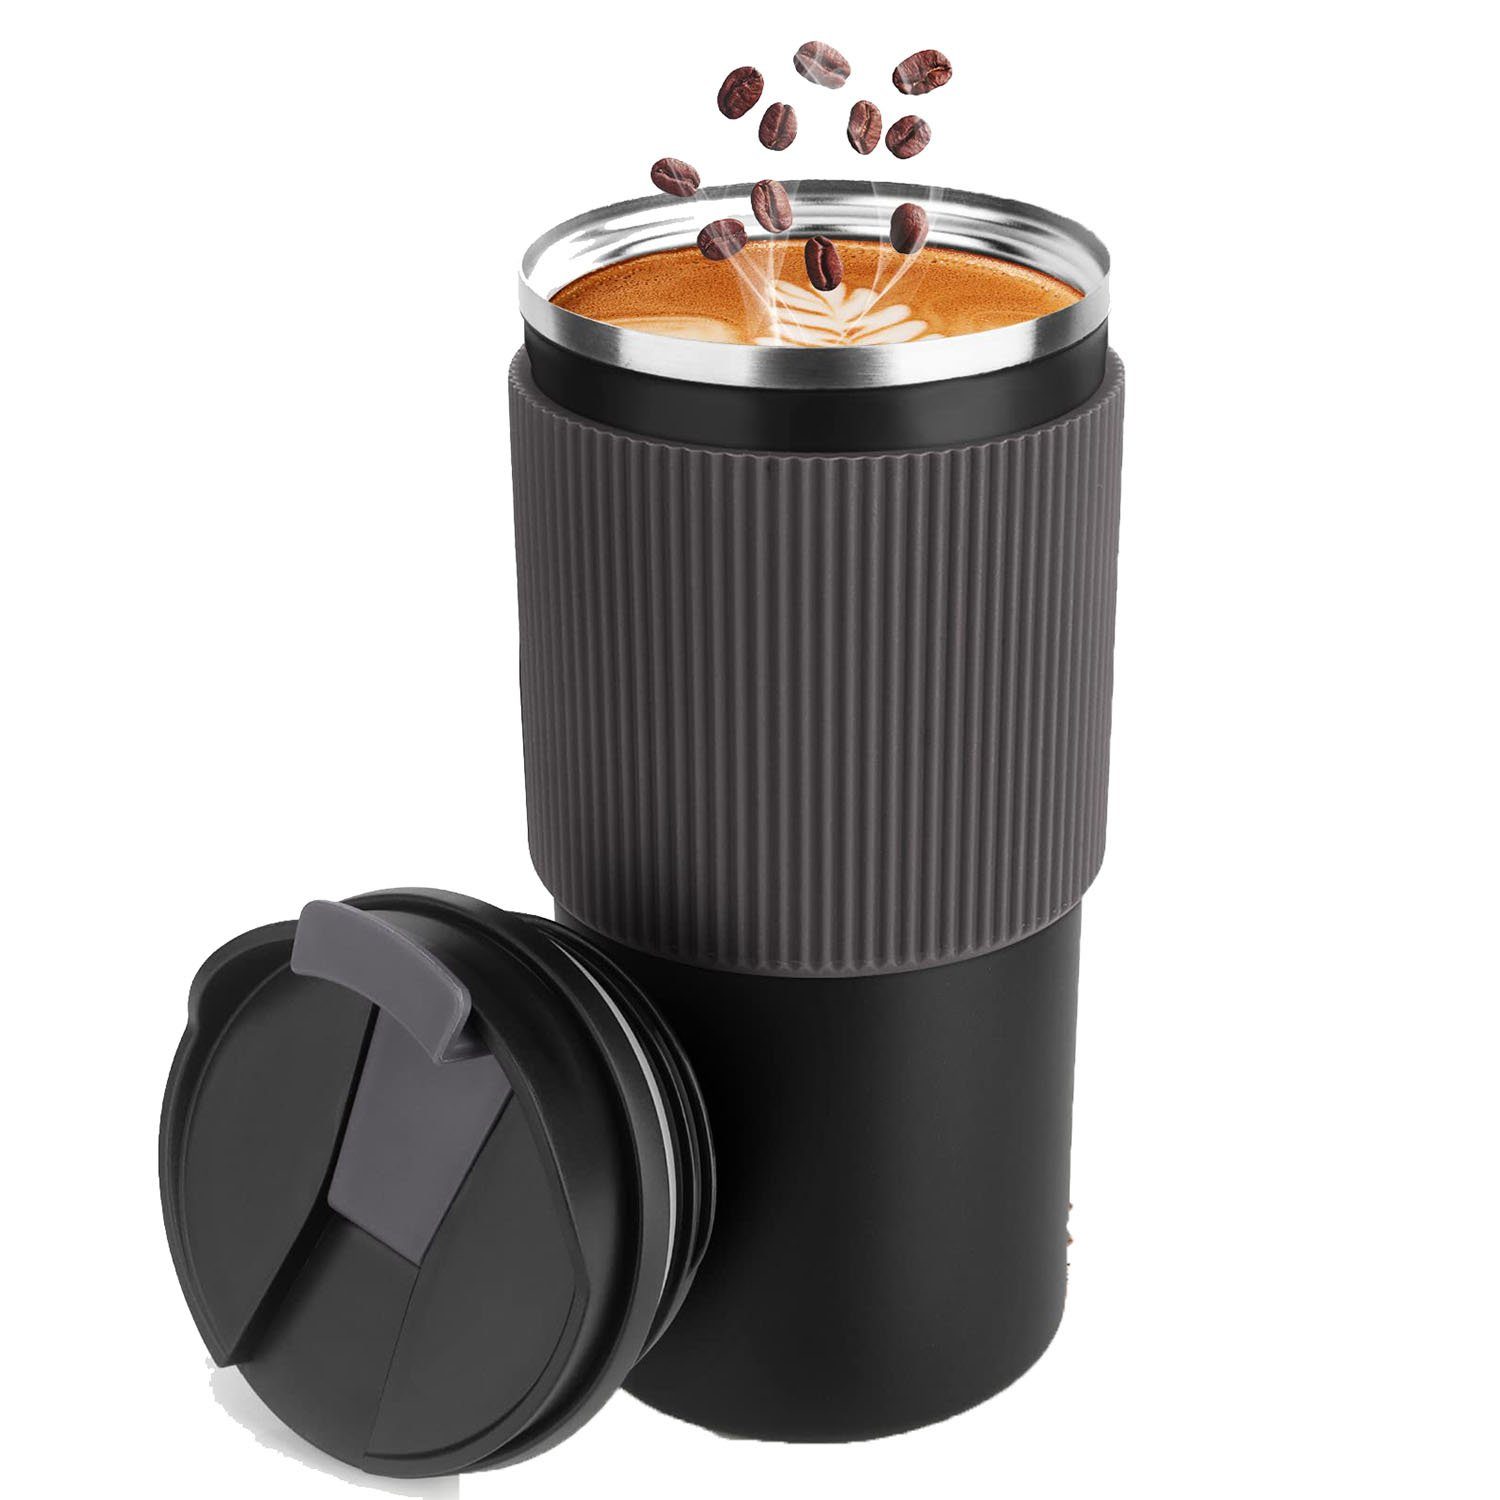 GelldG Kaffeebecher auslaufsicher schwarz Thermobecher-Isolierbecher, Becher